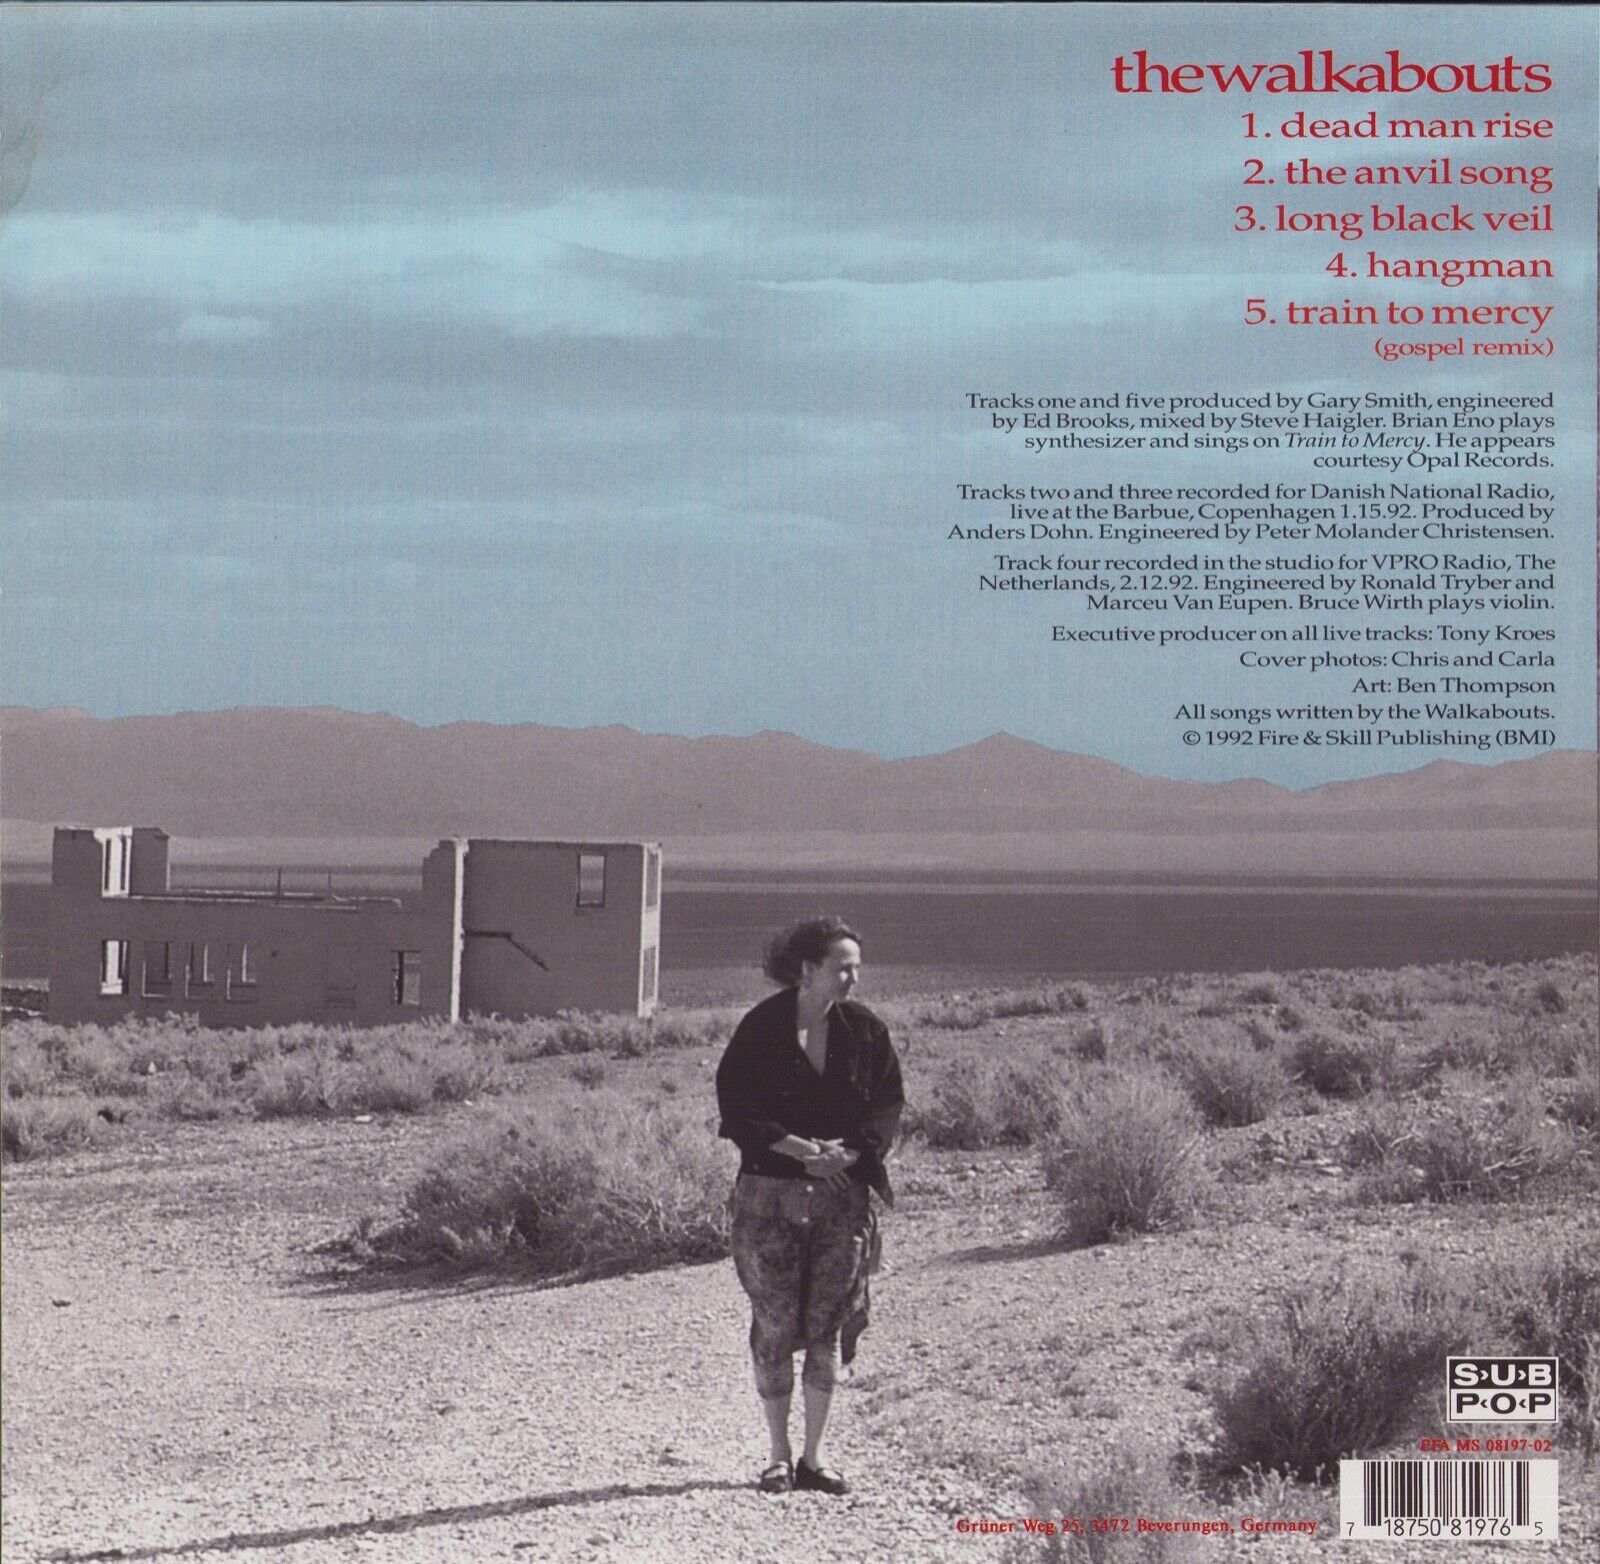 The Walkabouts - Dead Man Rise Vinyl 12"